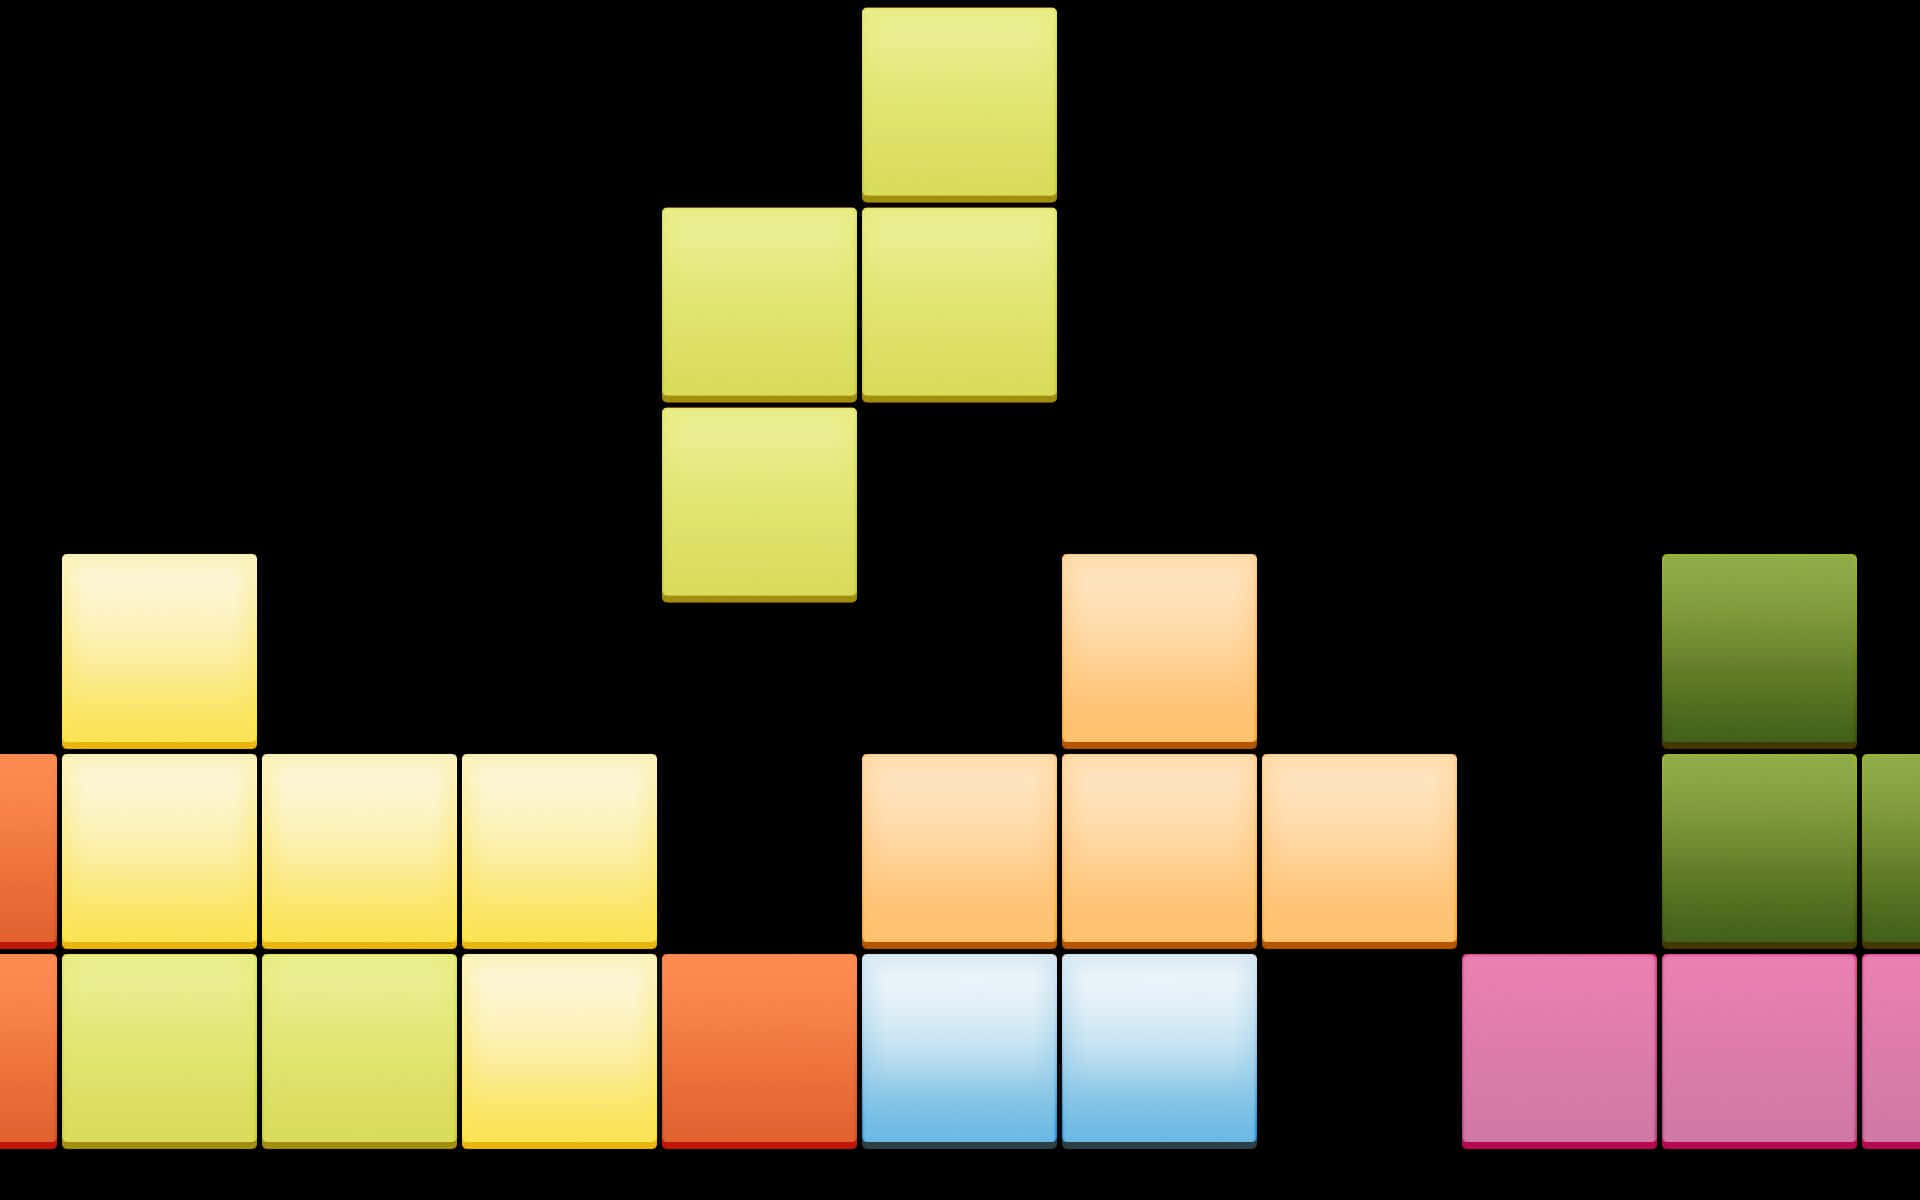 Tetris1920 X 1200 Baggrund.